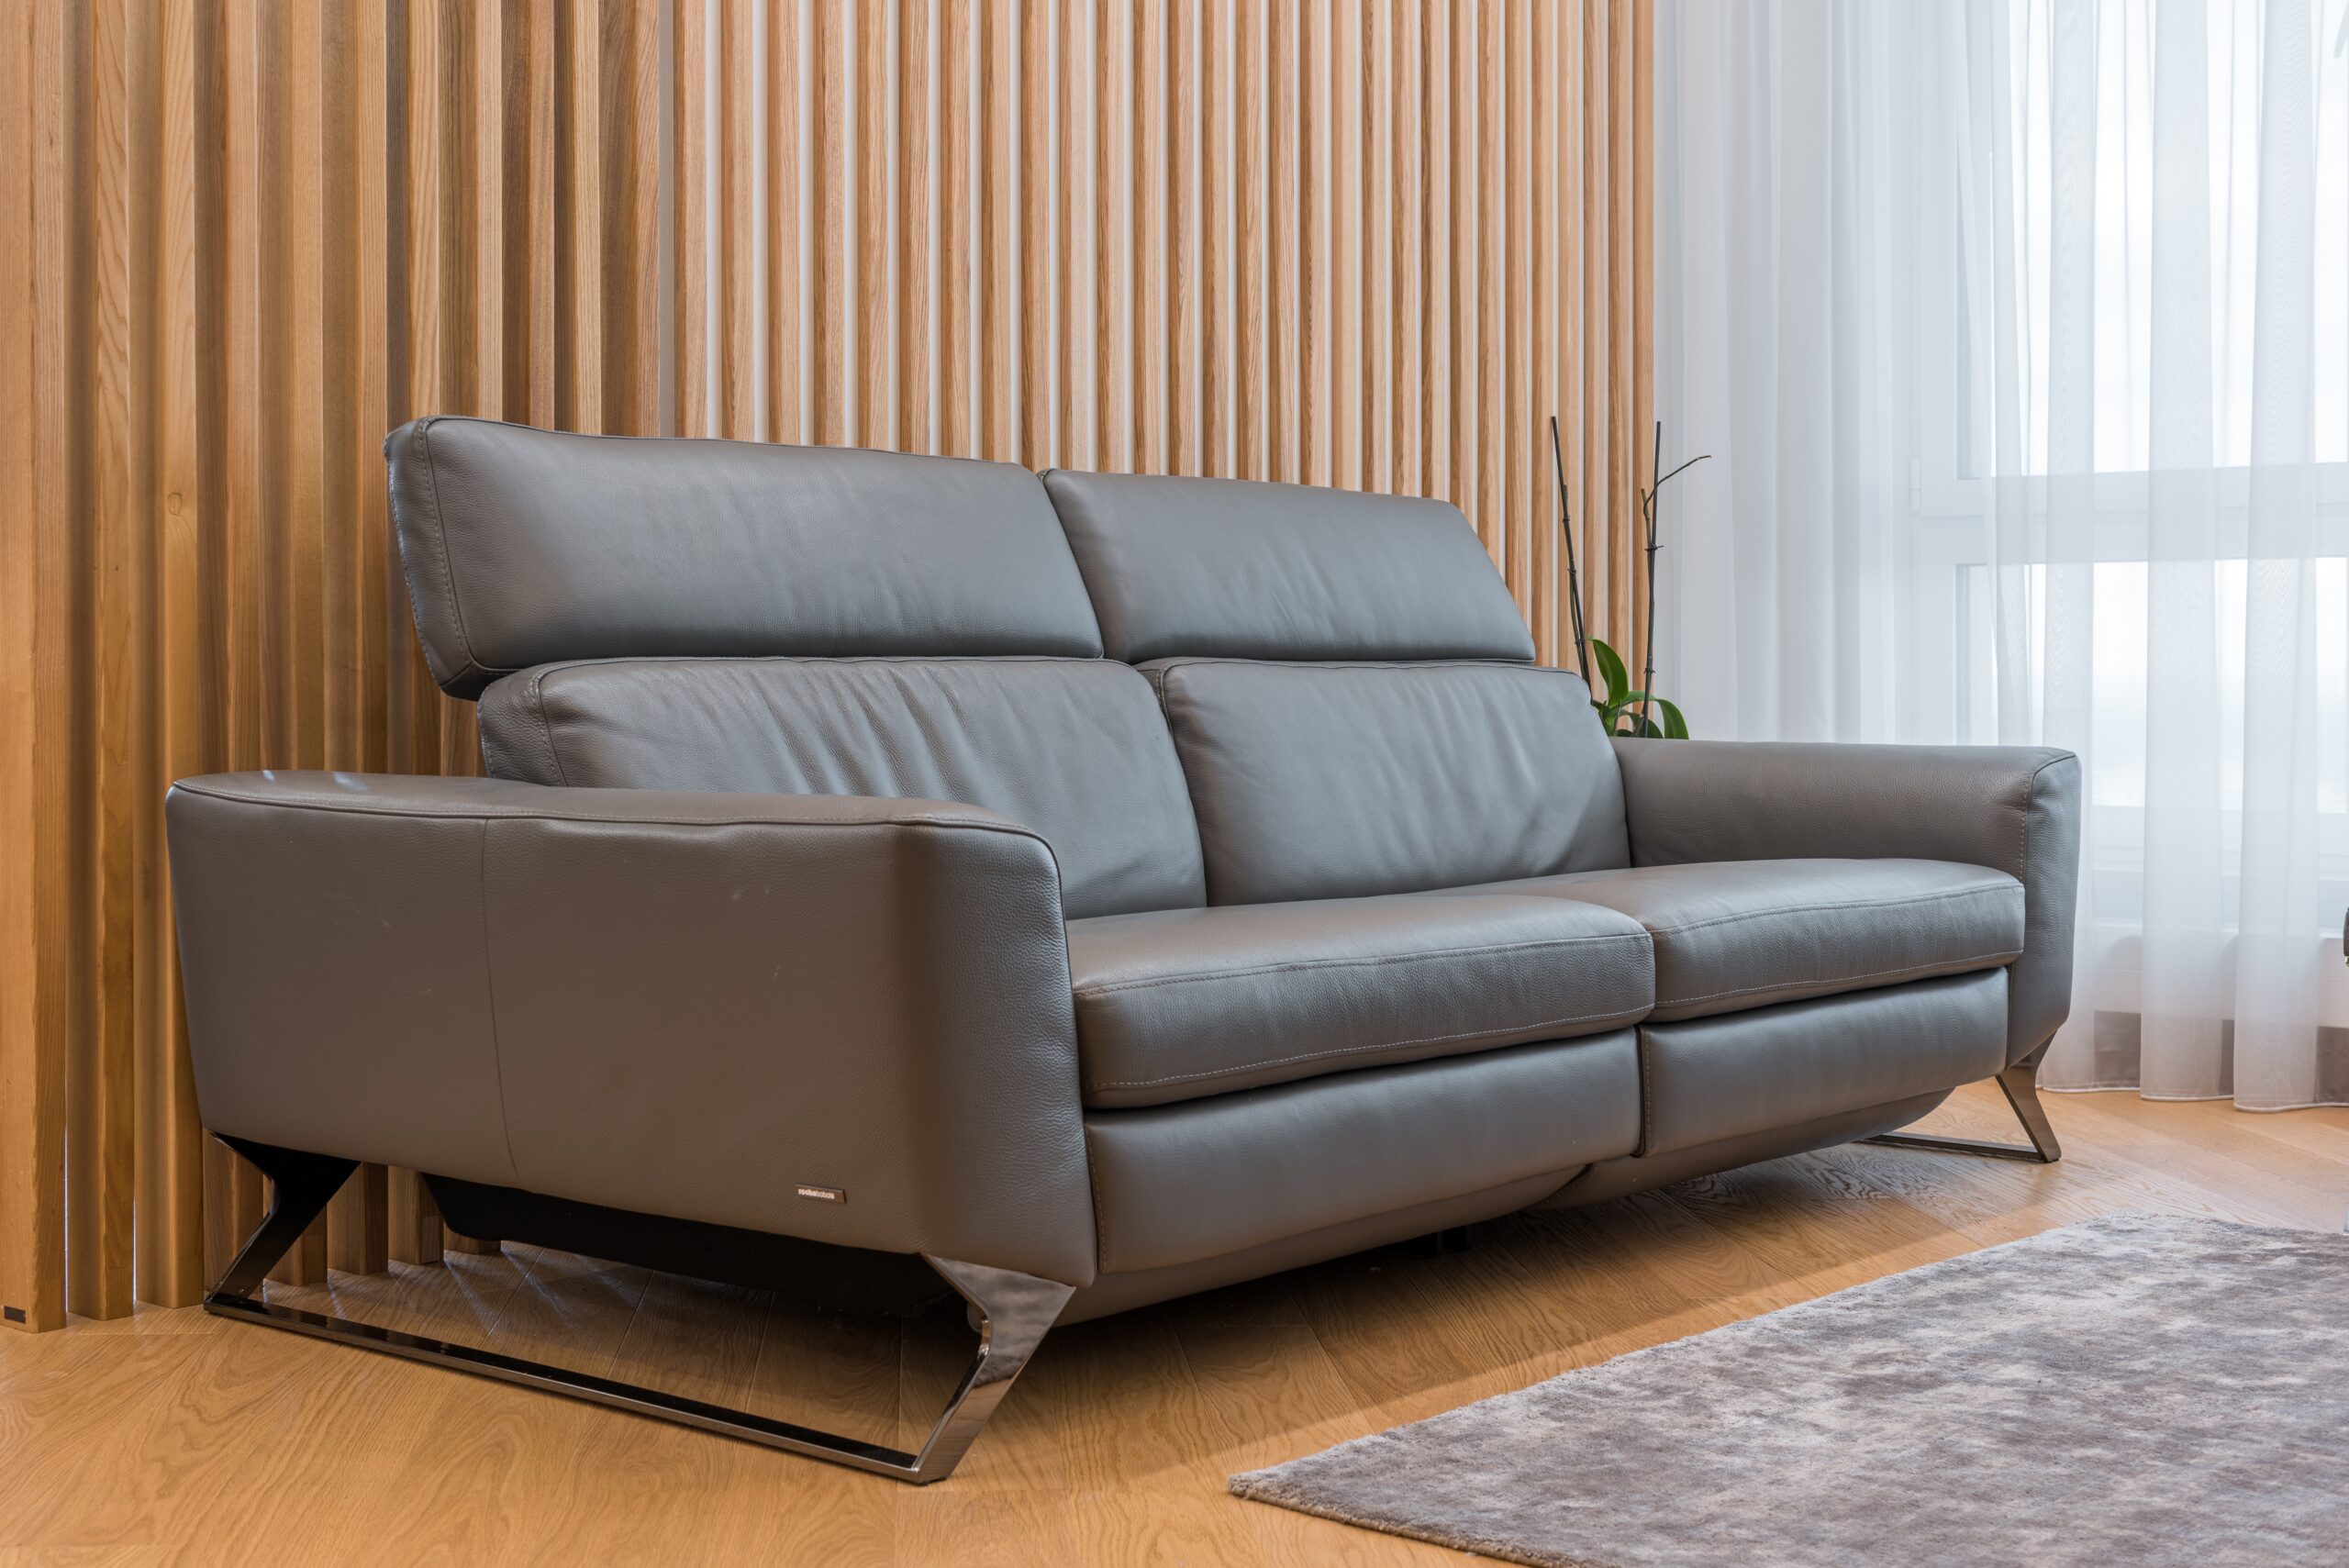 reupholster leather sofa london